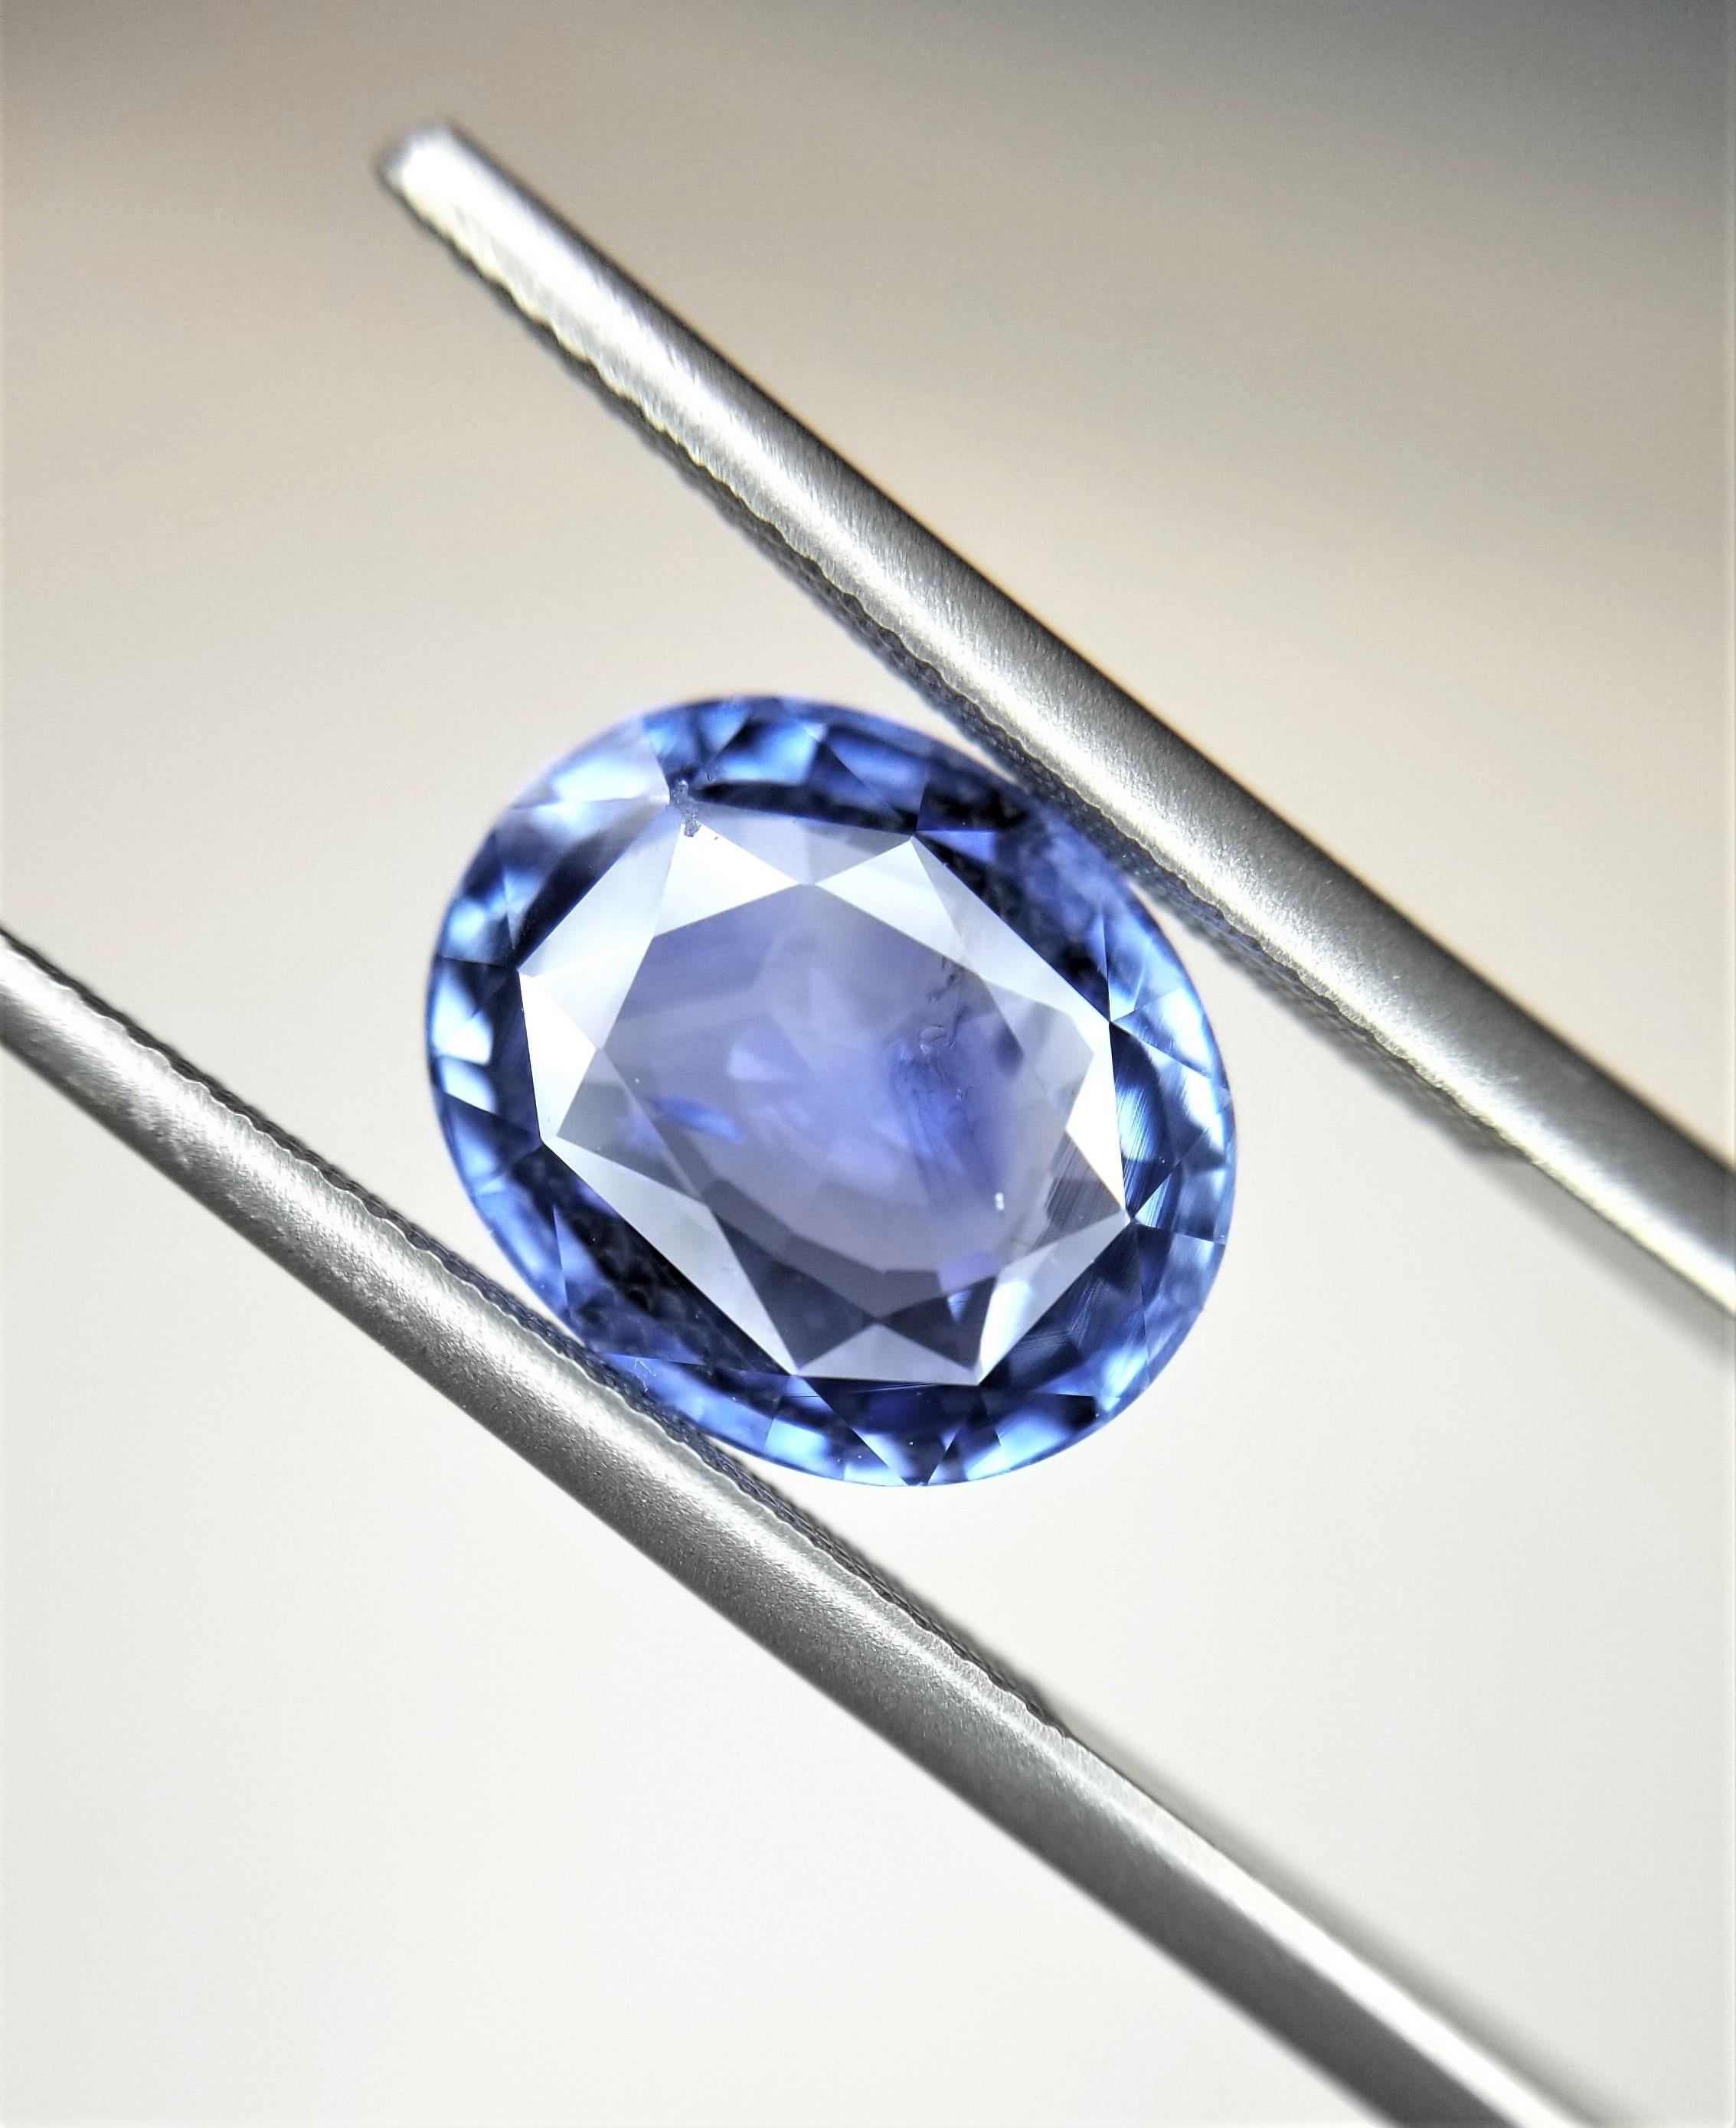 Contemporary Berberyn Certified 4.28 Carat Oval Blue Sapphire Pendant Necklace in 18k For Sale